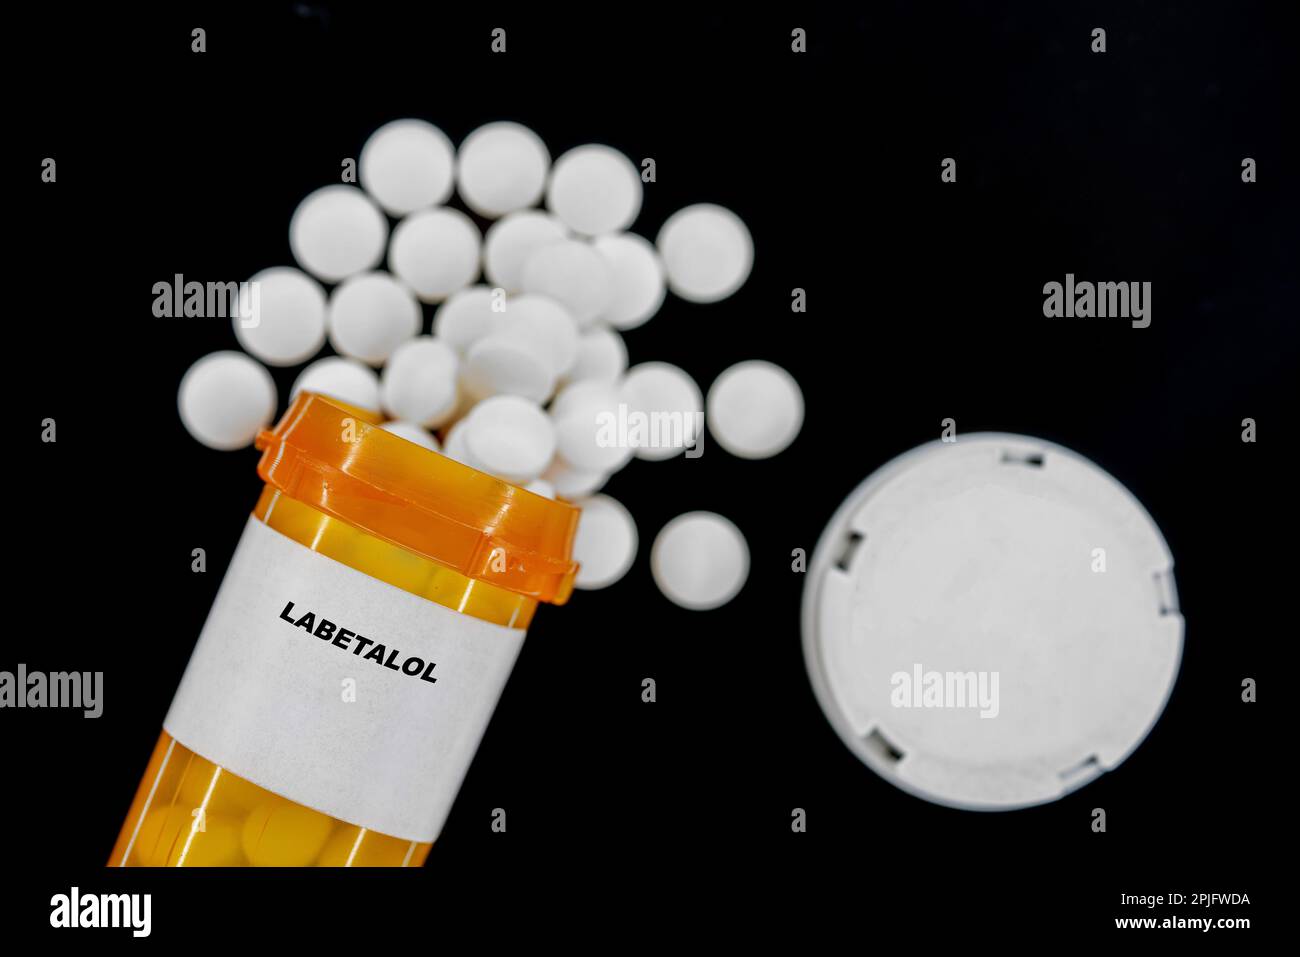 Labetalol HCl Tablets